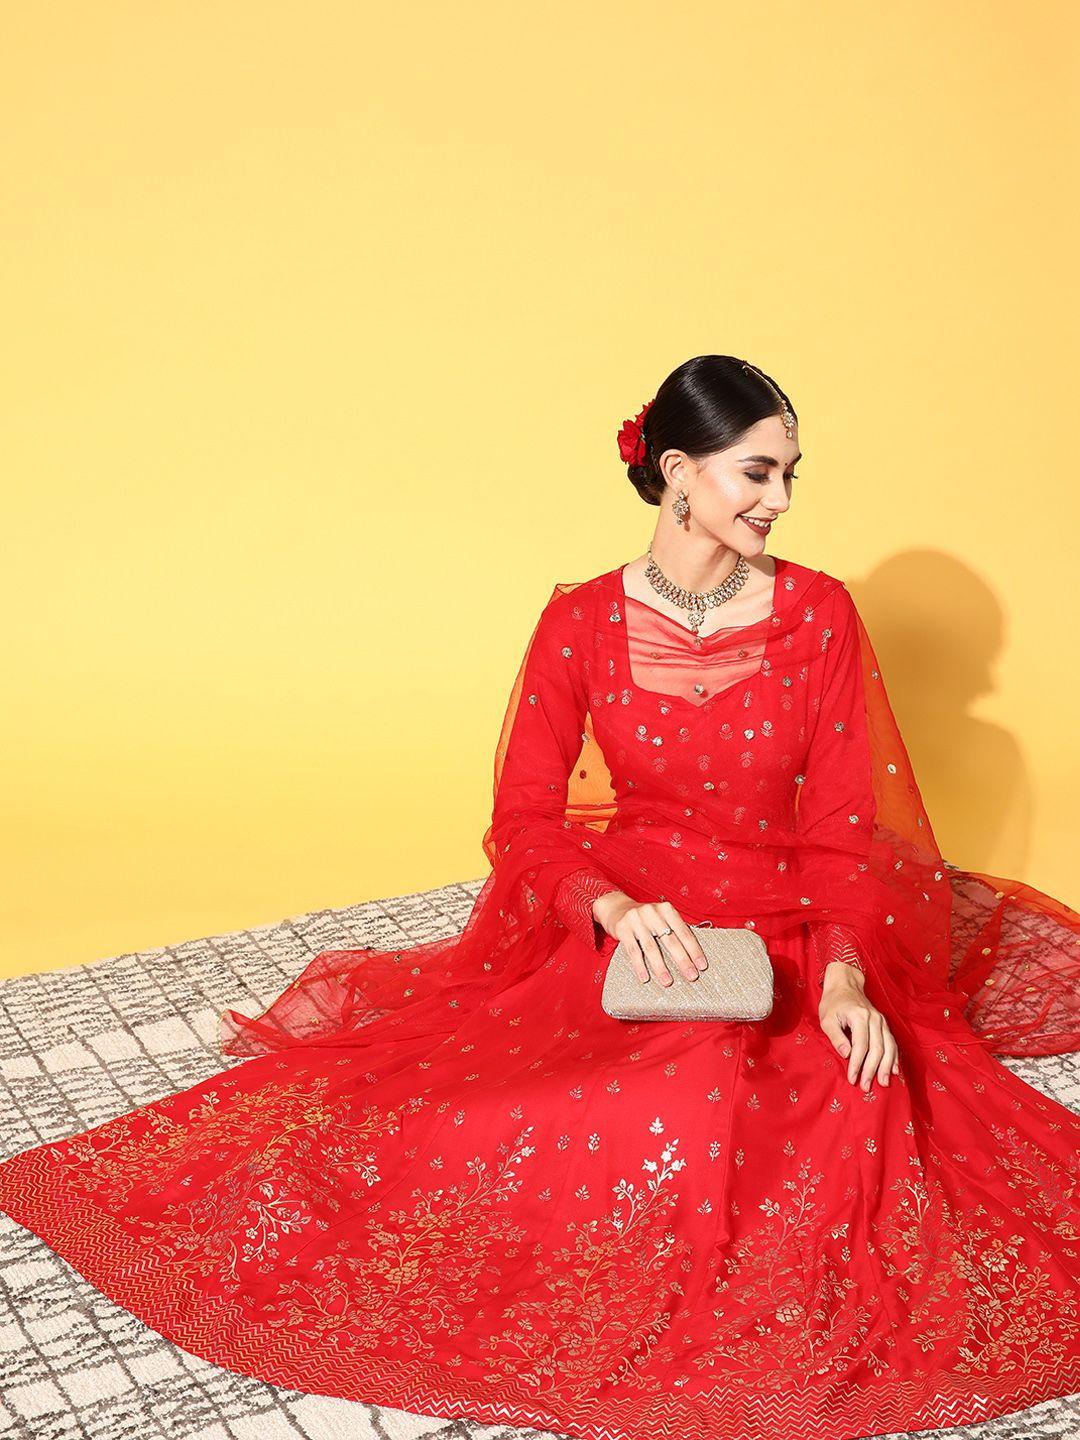 panit women red ethnic motifs swirling volume dress